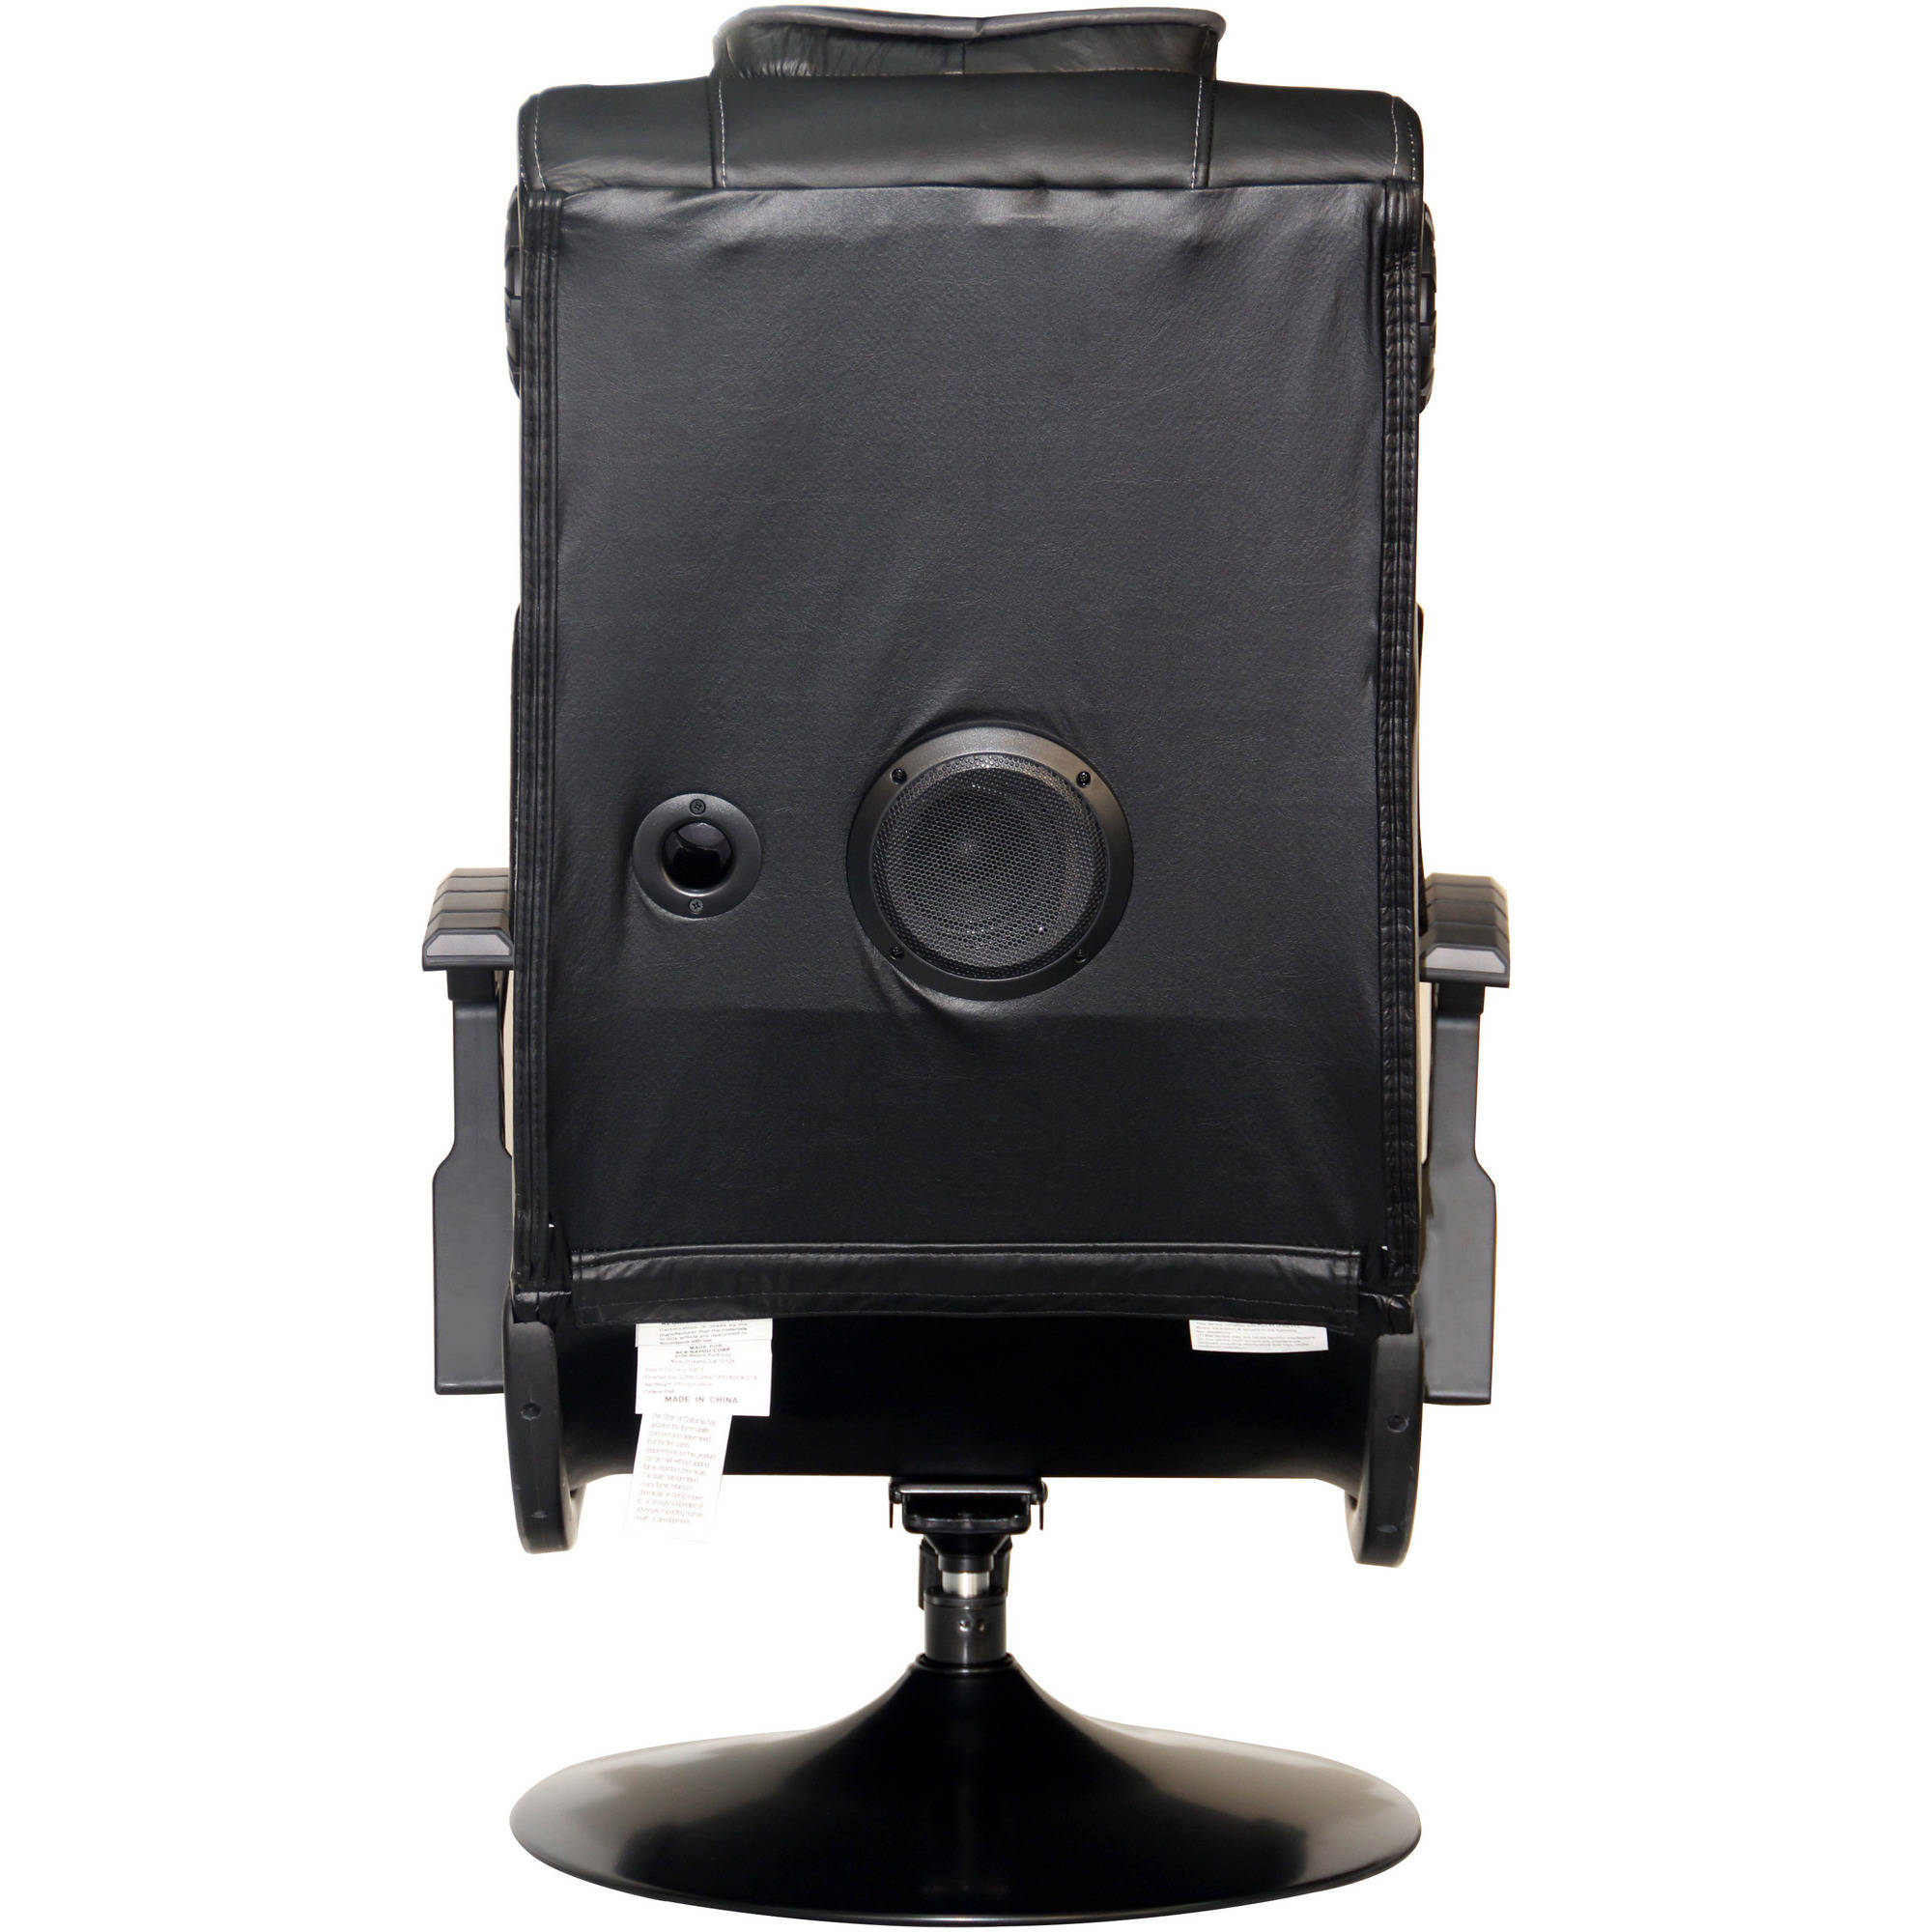 X Rocker Pro Series Pedestal Wireless 2.1 Gaming Chair Rocker, Black - image 5 of 5